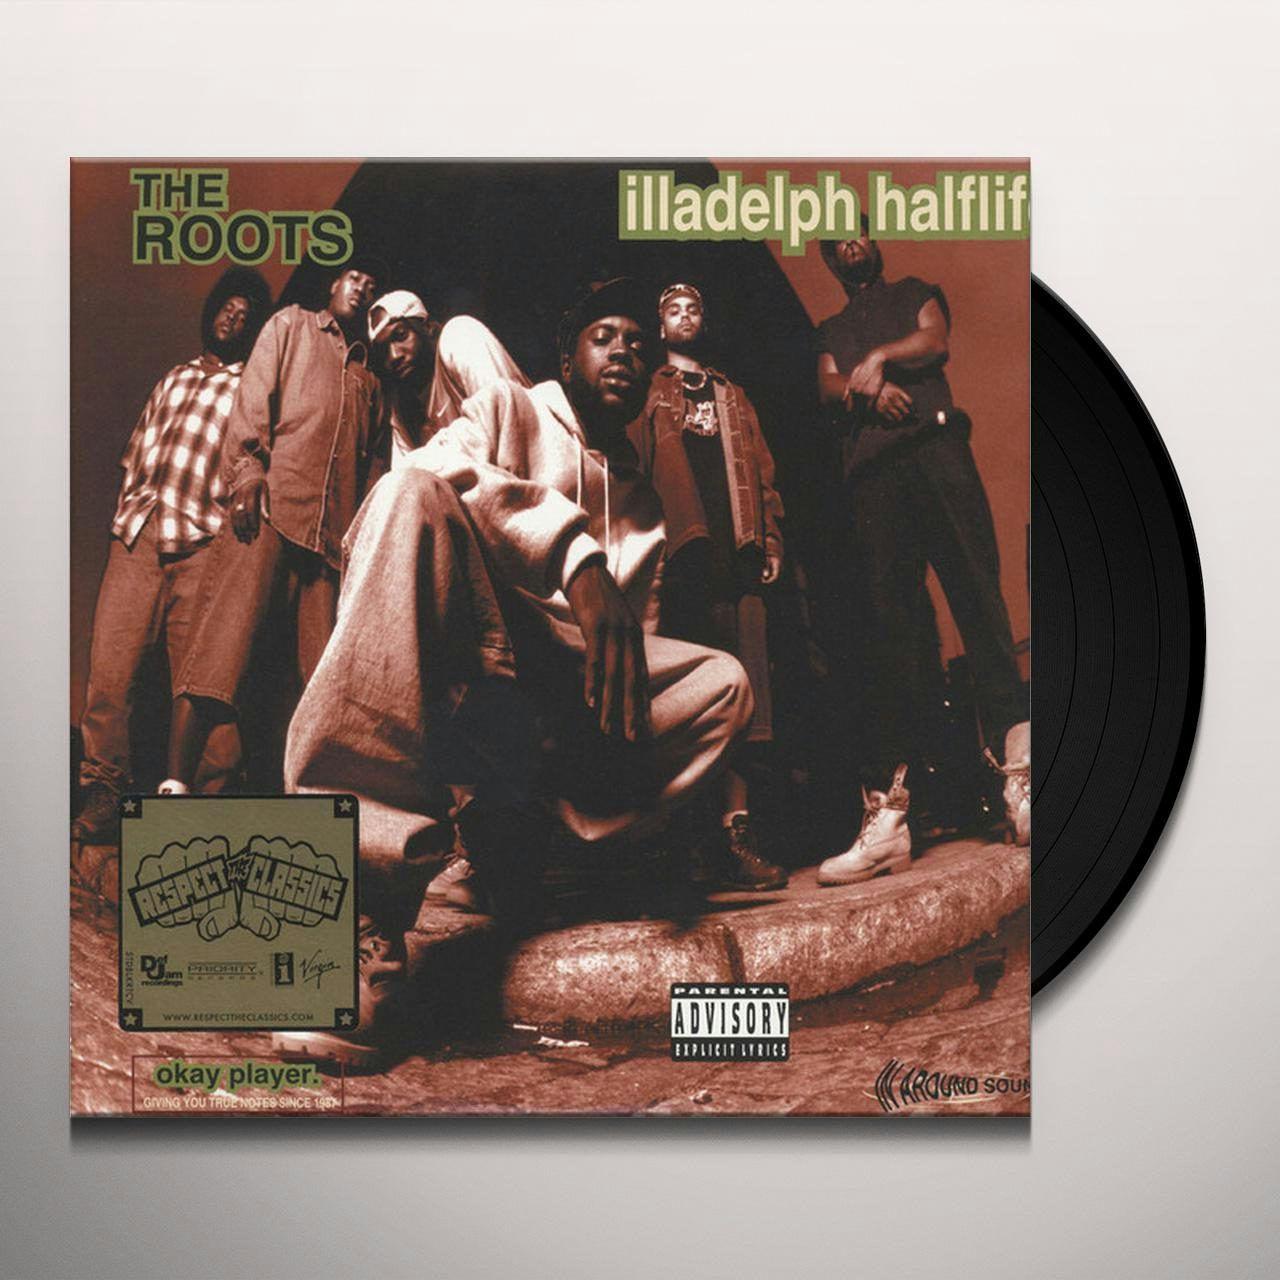 The Roots Illadelph Halflife Vinyl Record